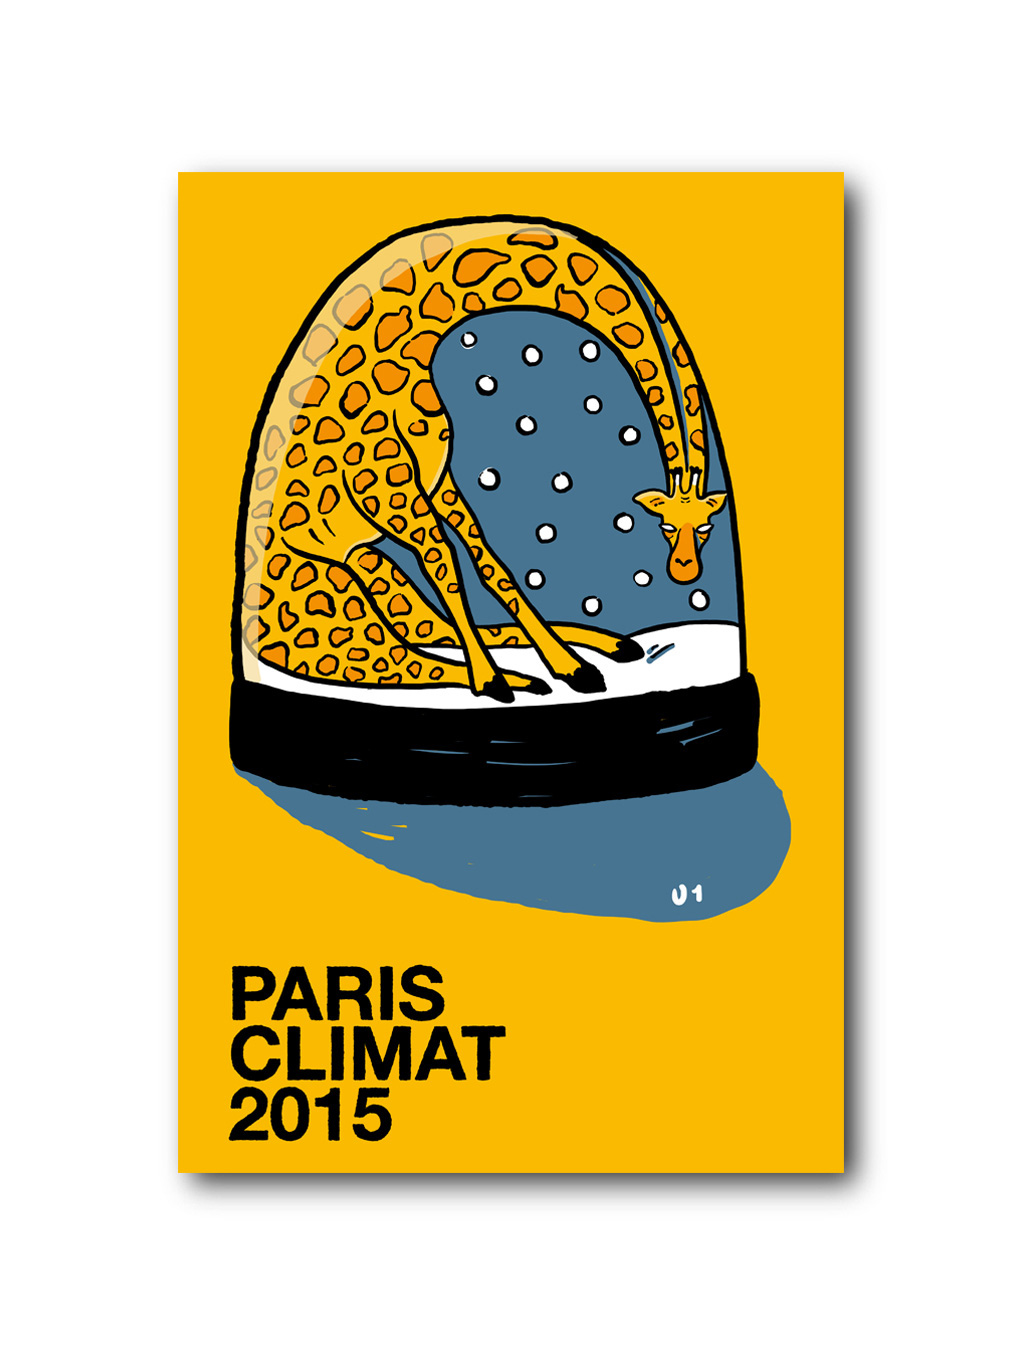 Paris climat climate global warming pingoin girafe giraffe funny Event ecologic summit poster